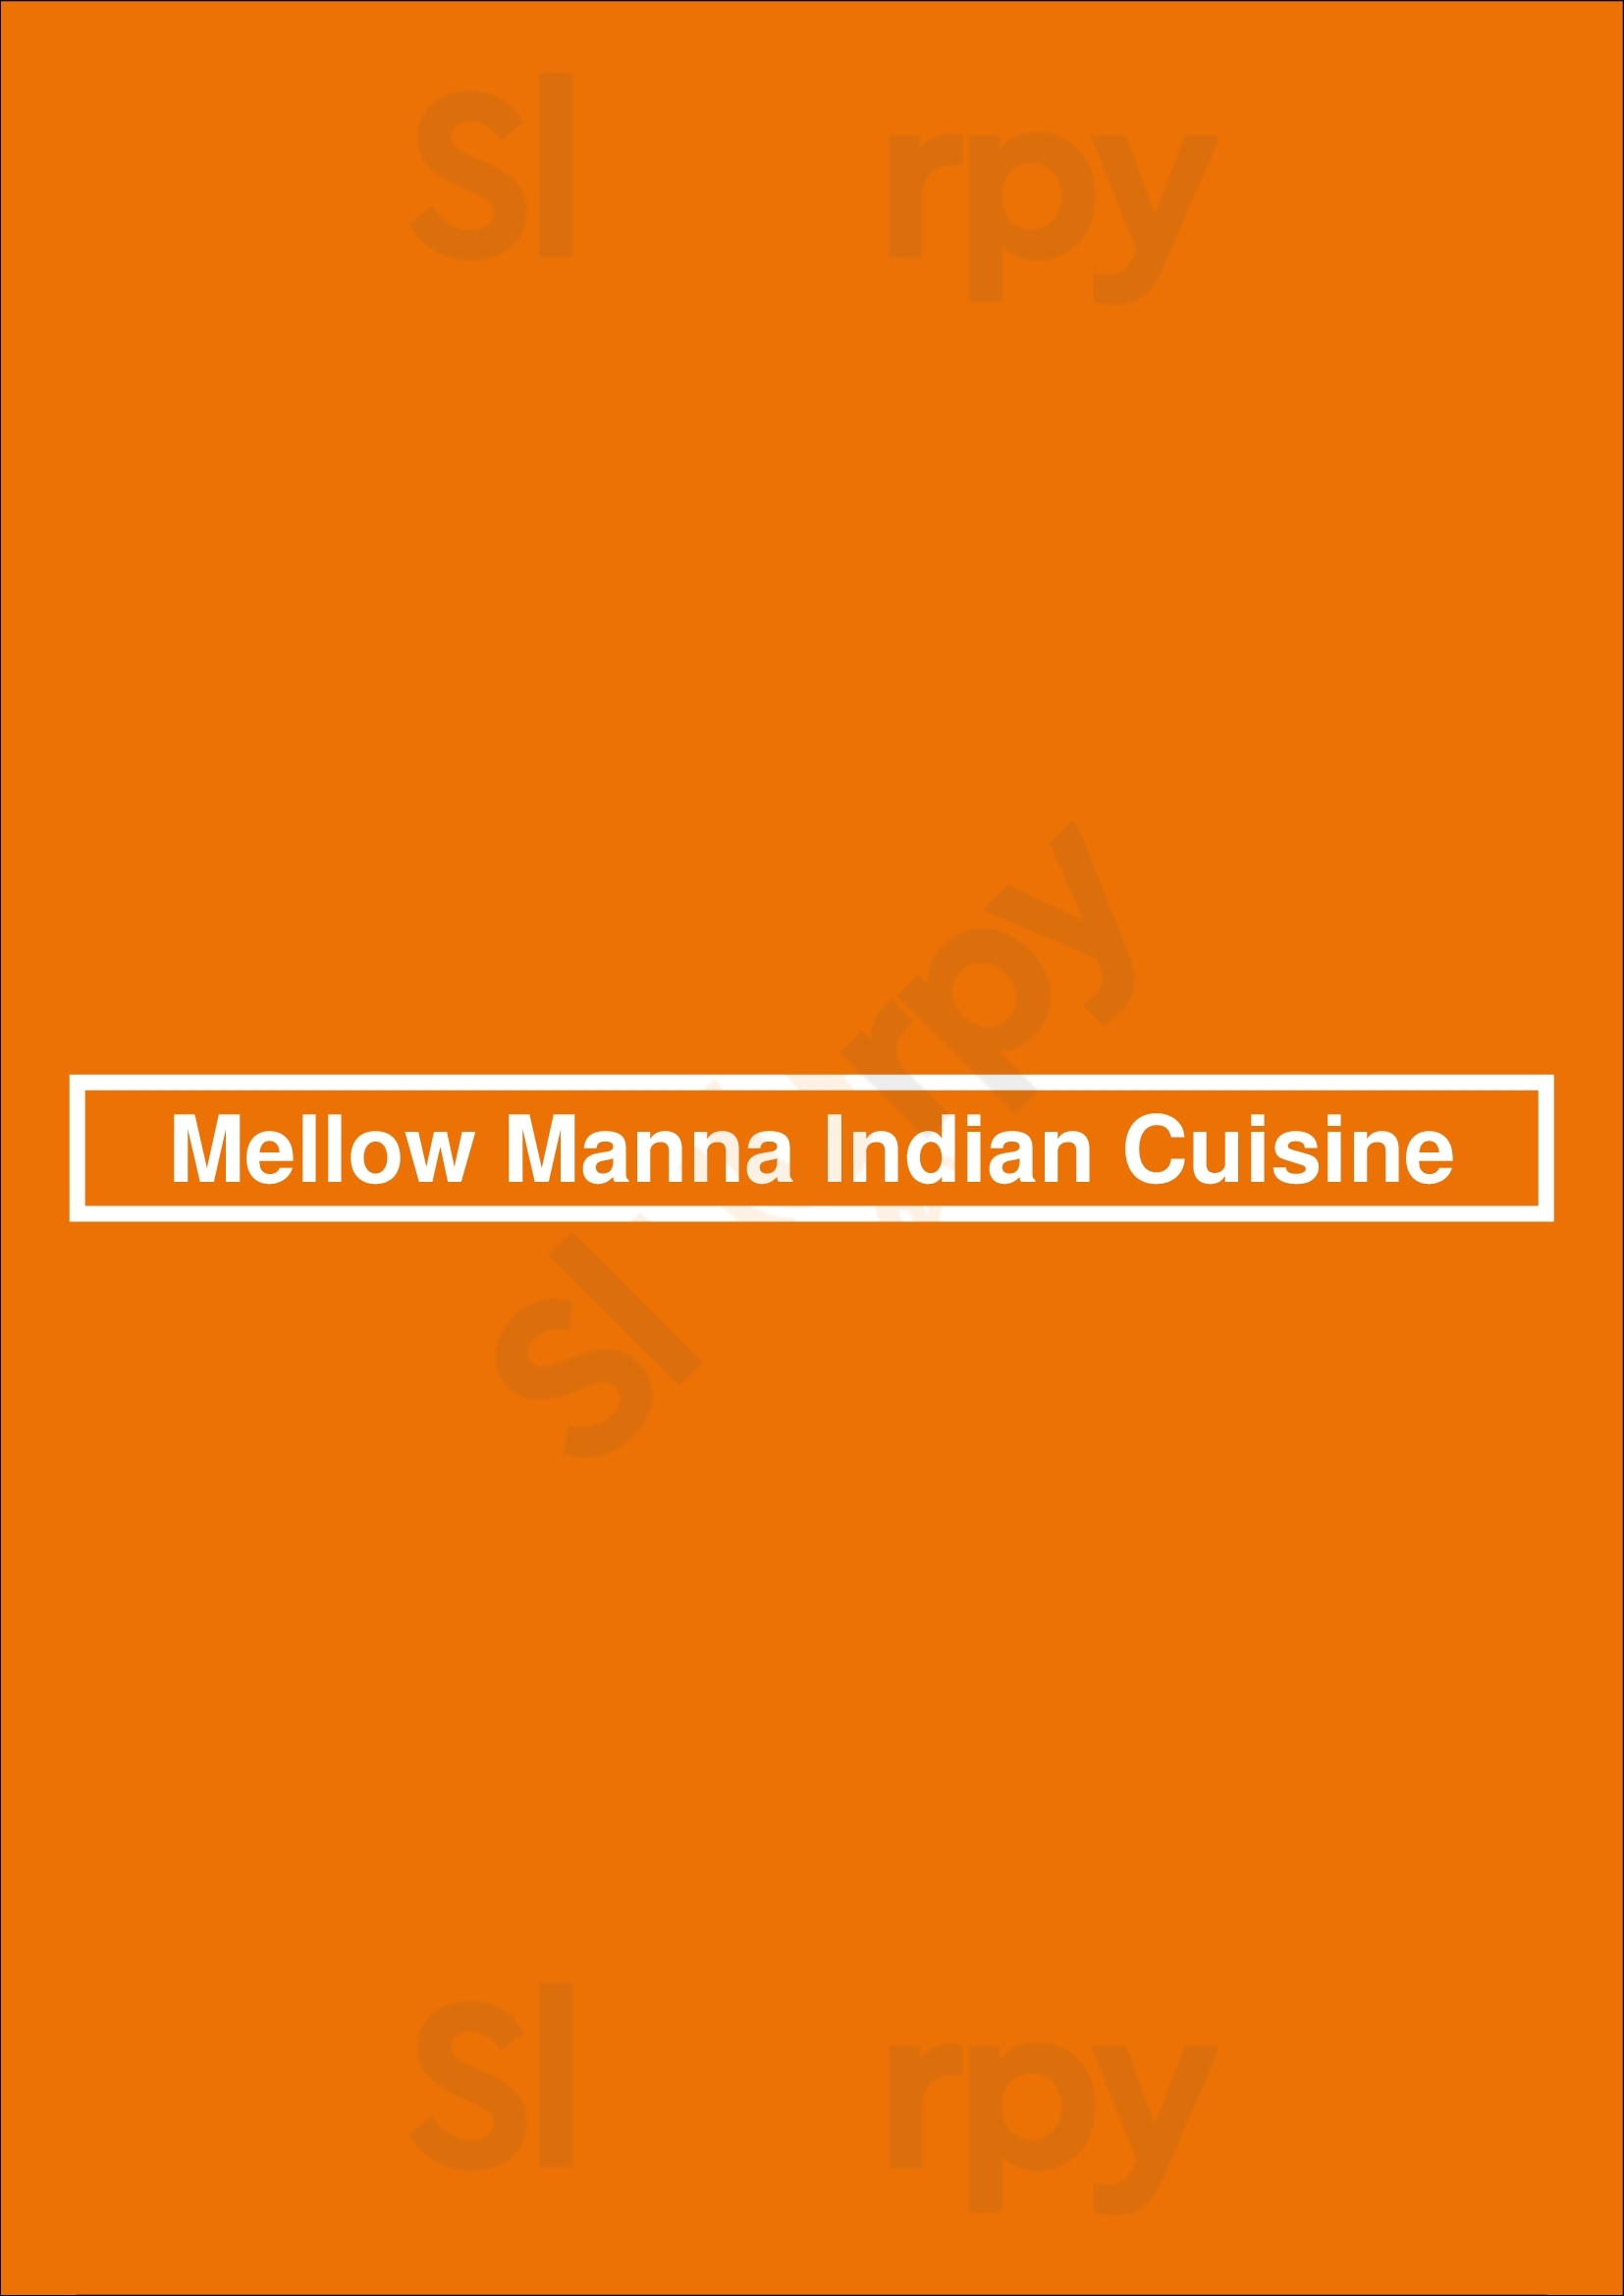 Mellow Manna Indian Cuisine Houston Menu - 1